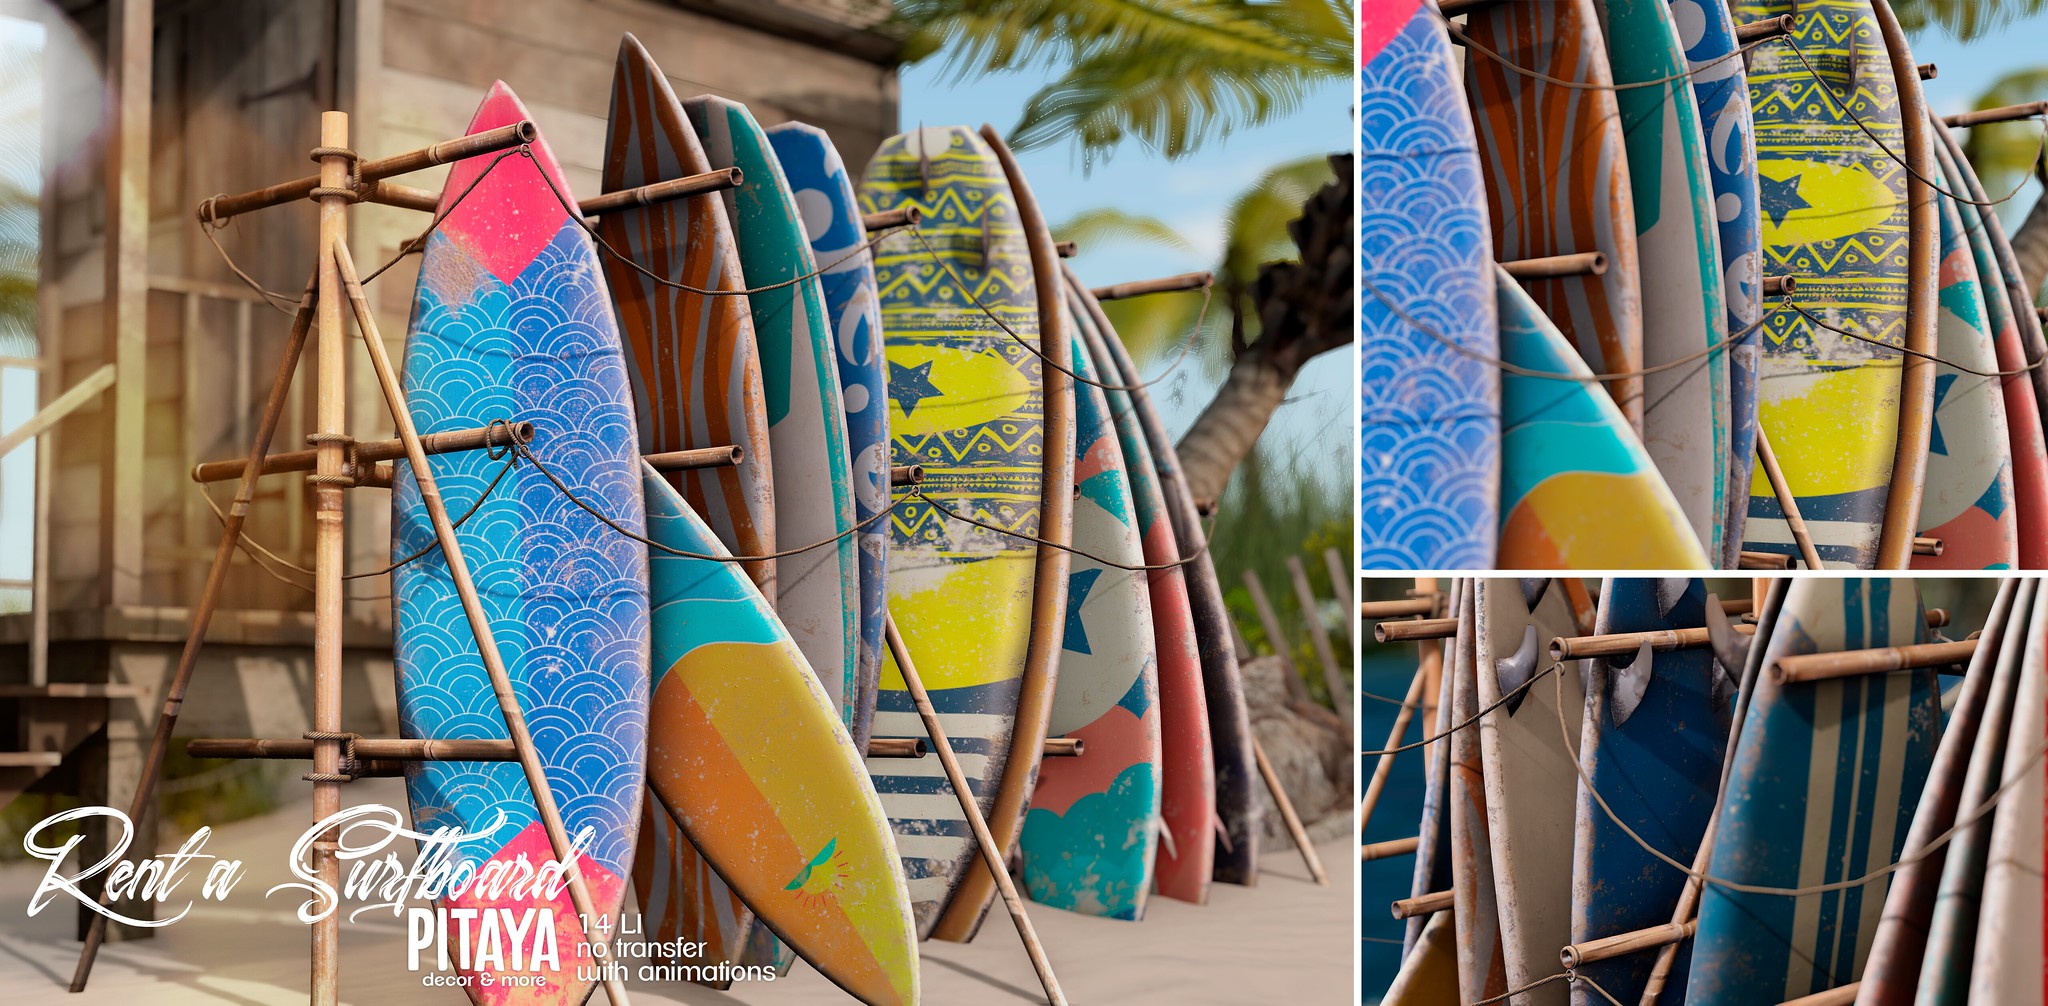 Pitaya – Rent a Surfboard